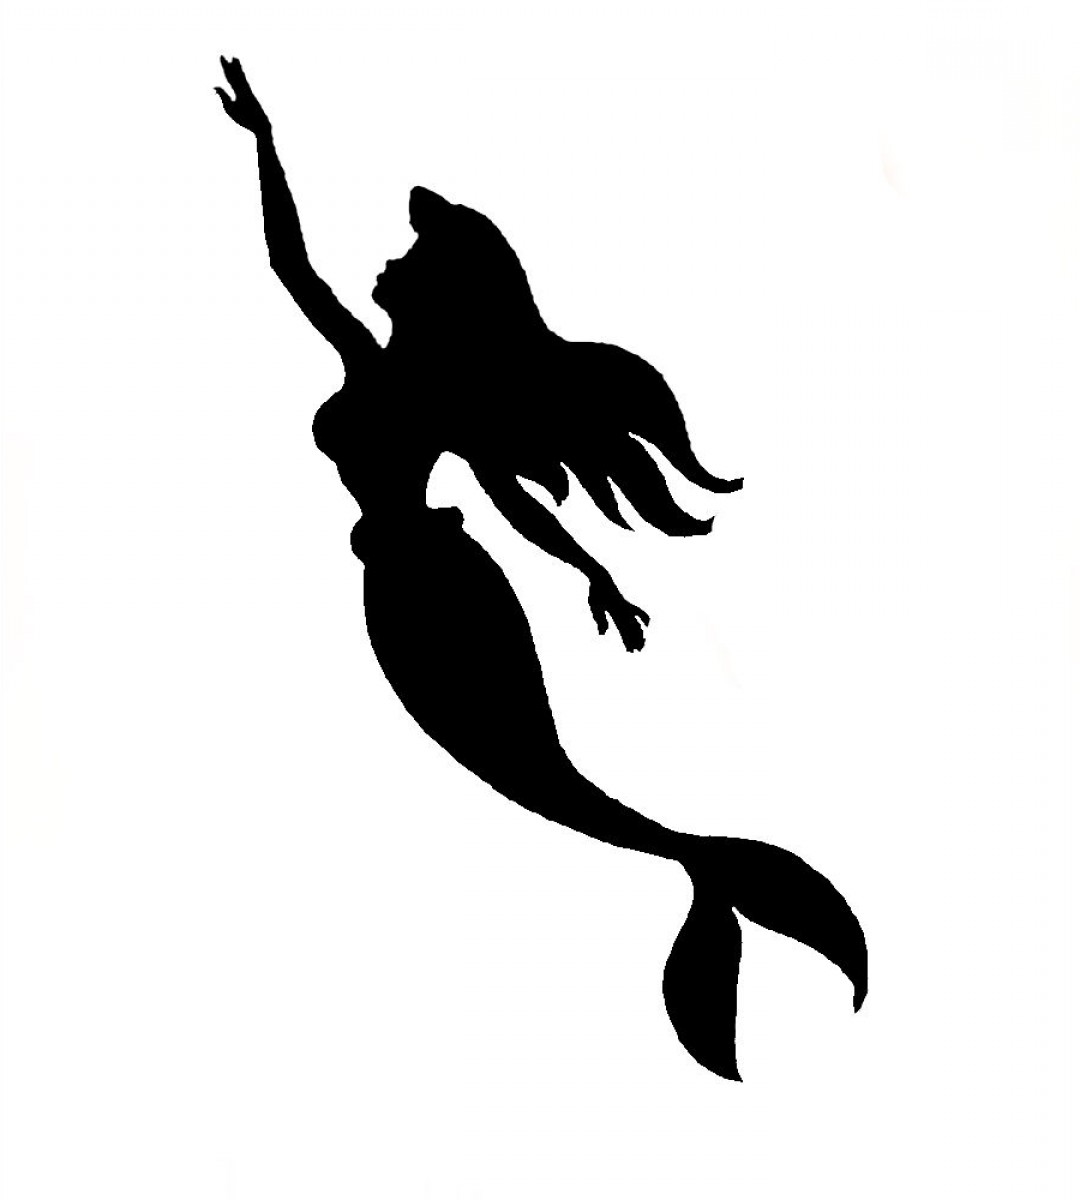 Ariel The Little Mermaid Silhouette.